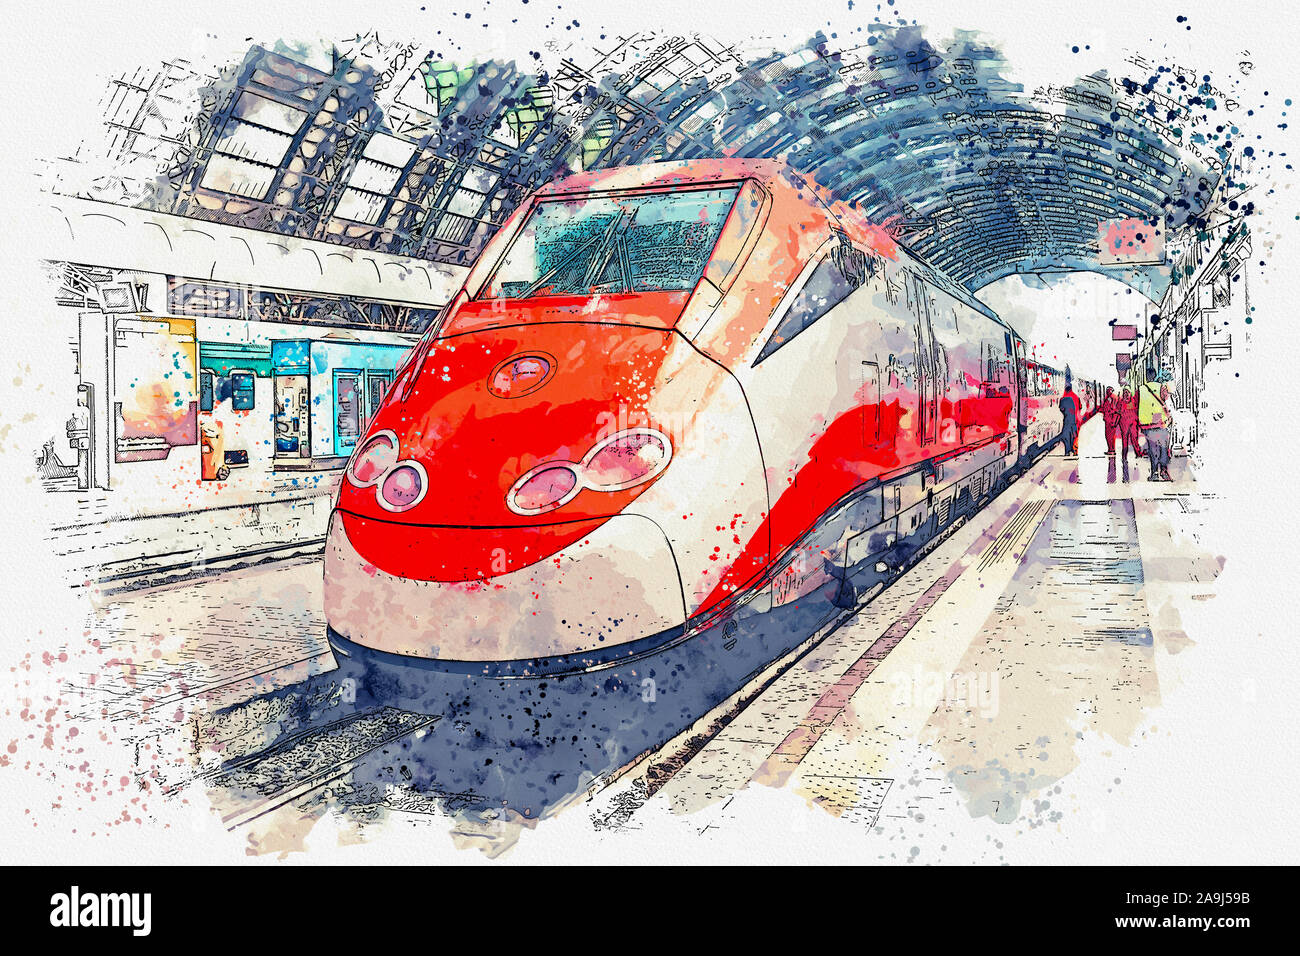 566 High Speed Train Sketch Images, Stock Photos & Vectors | Shutterstock